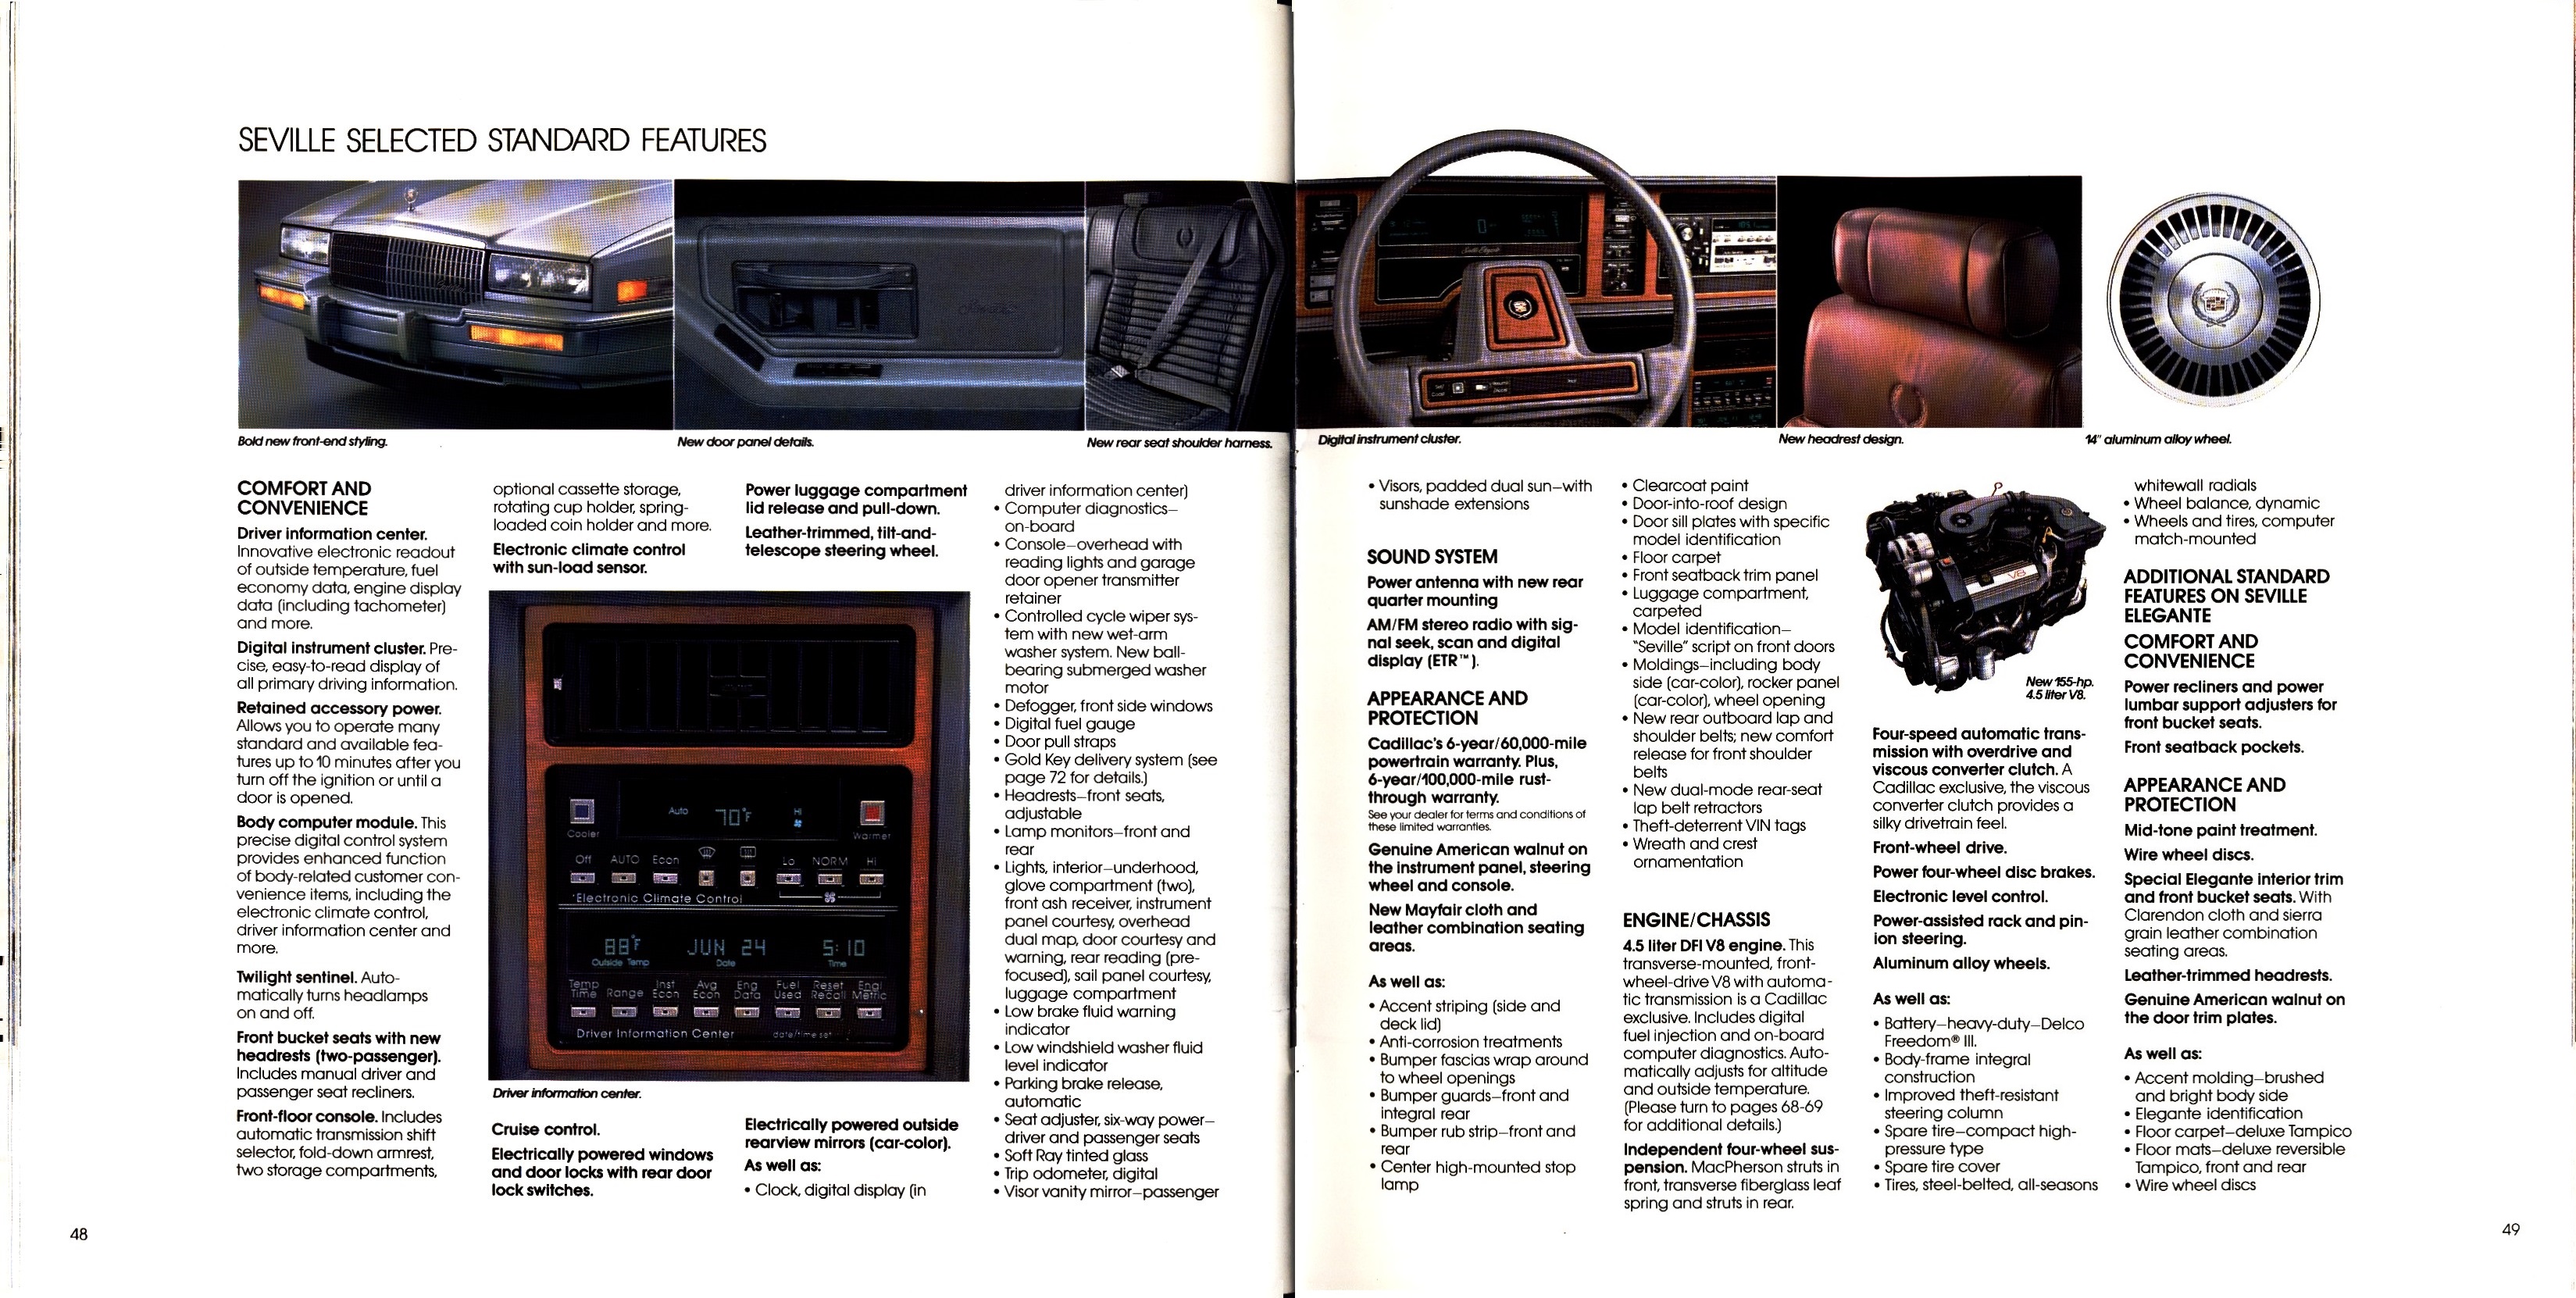 1988 Cadillac Full Line Prestige Brochure 48-49